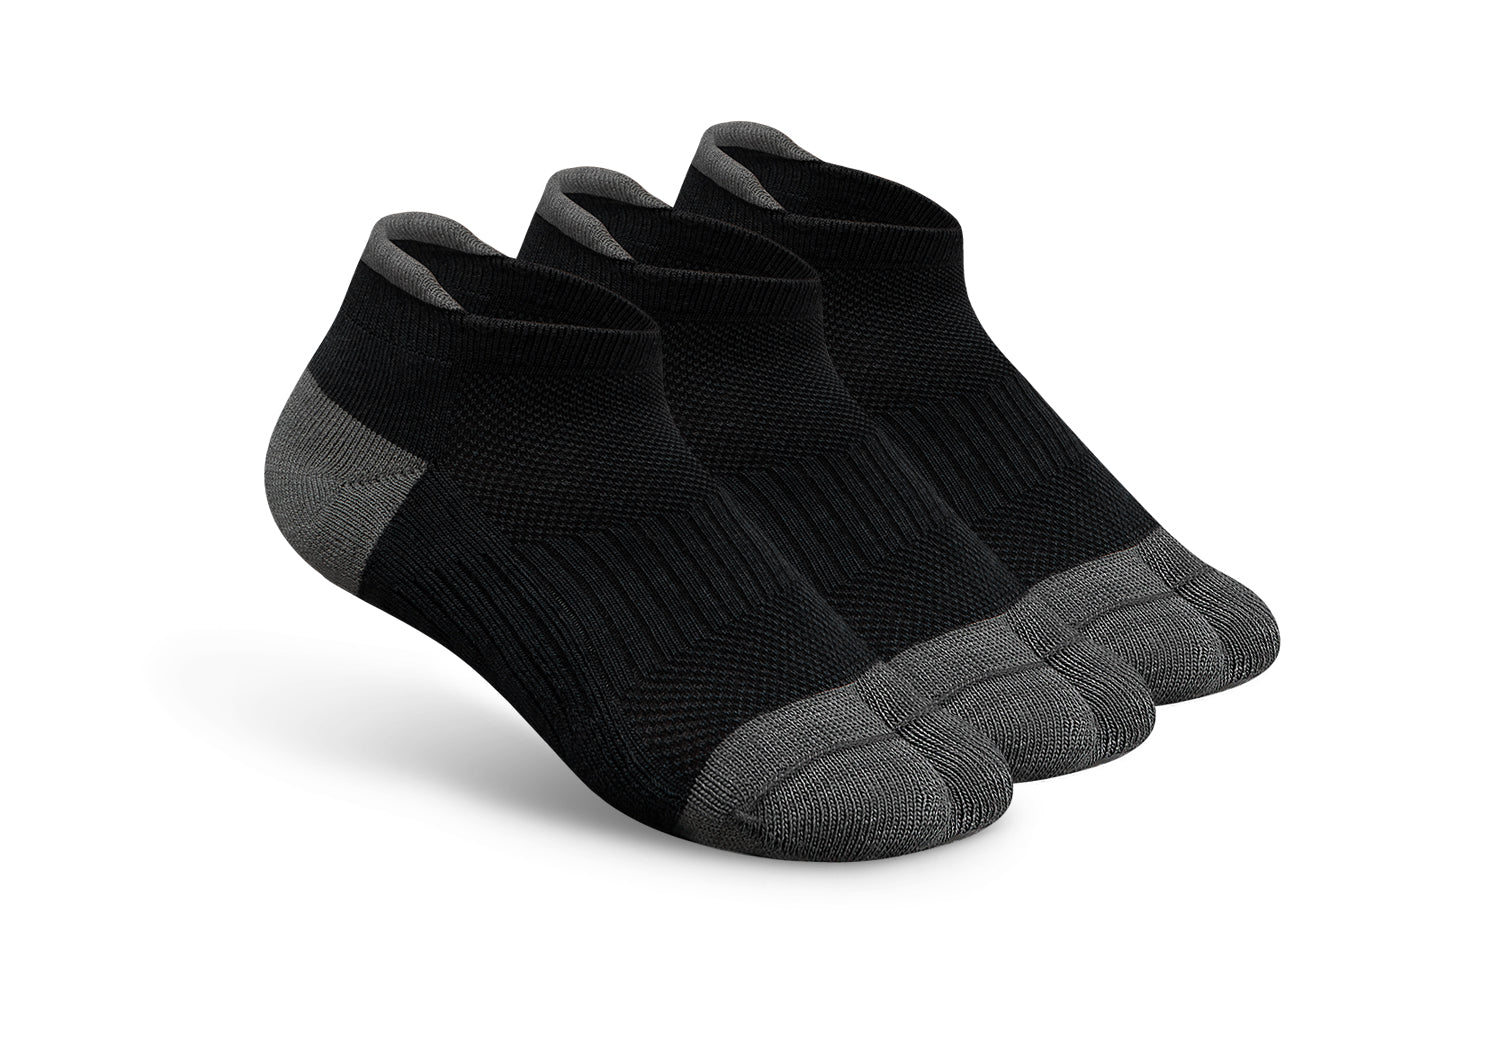 30% OFF) Sfrcord™ Bunion-Relief Socks – Snovee